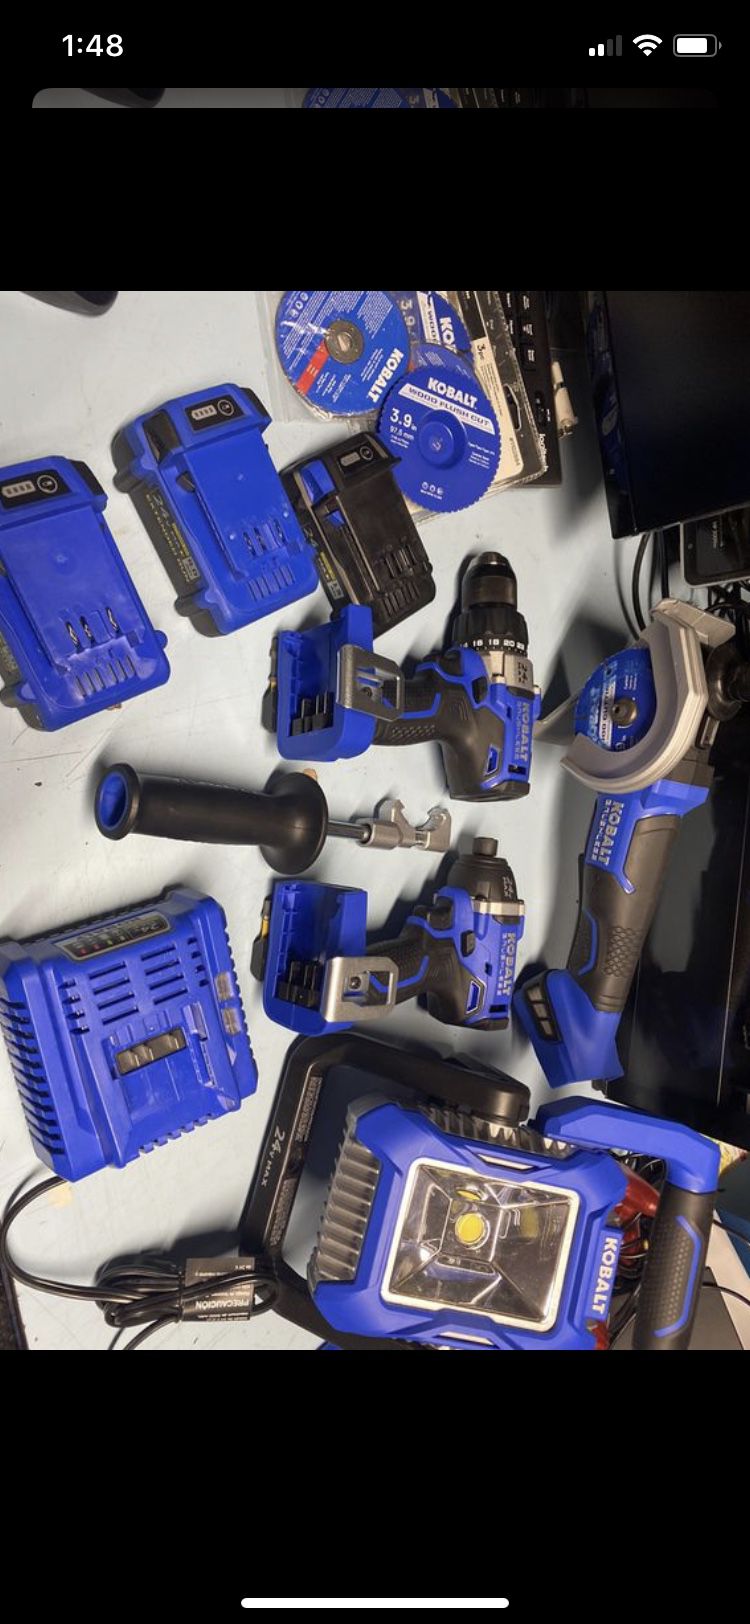 New Kobalt Tools lots of tools.